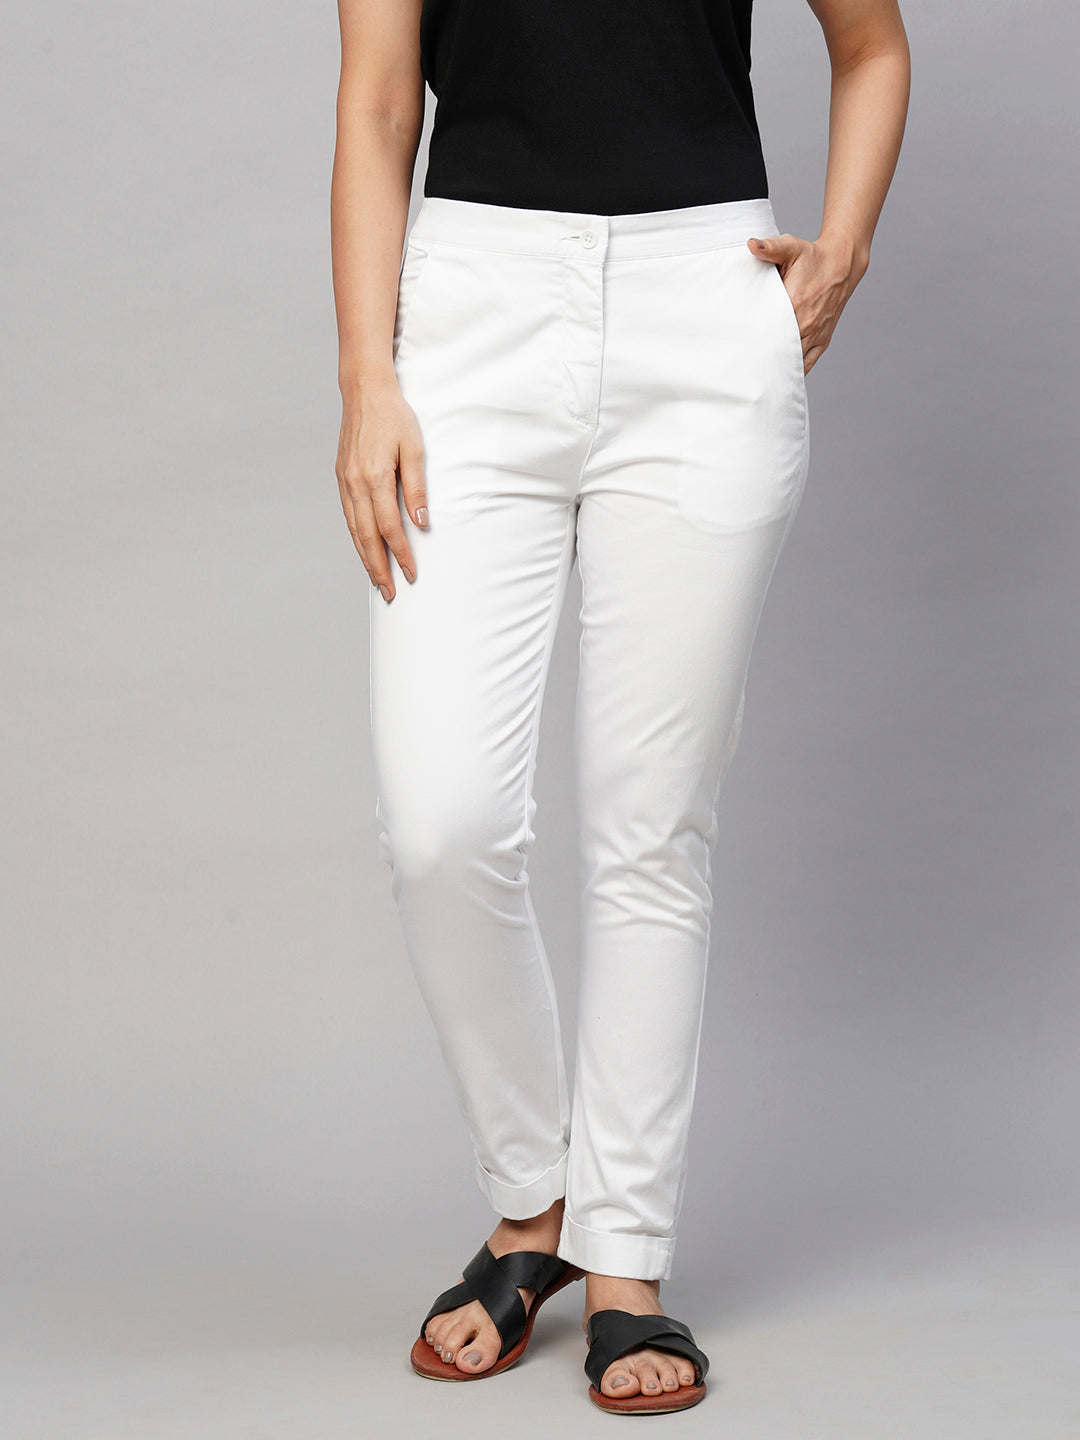 Women's White Cotton Lycra Slim Fit Pant